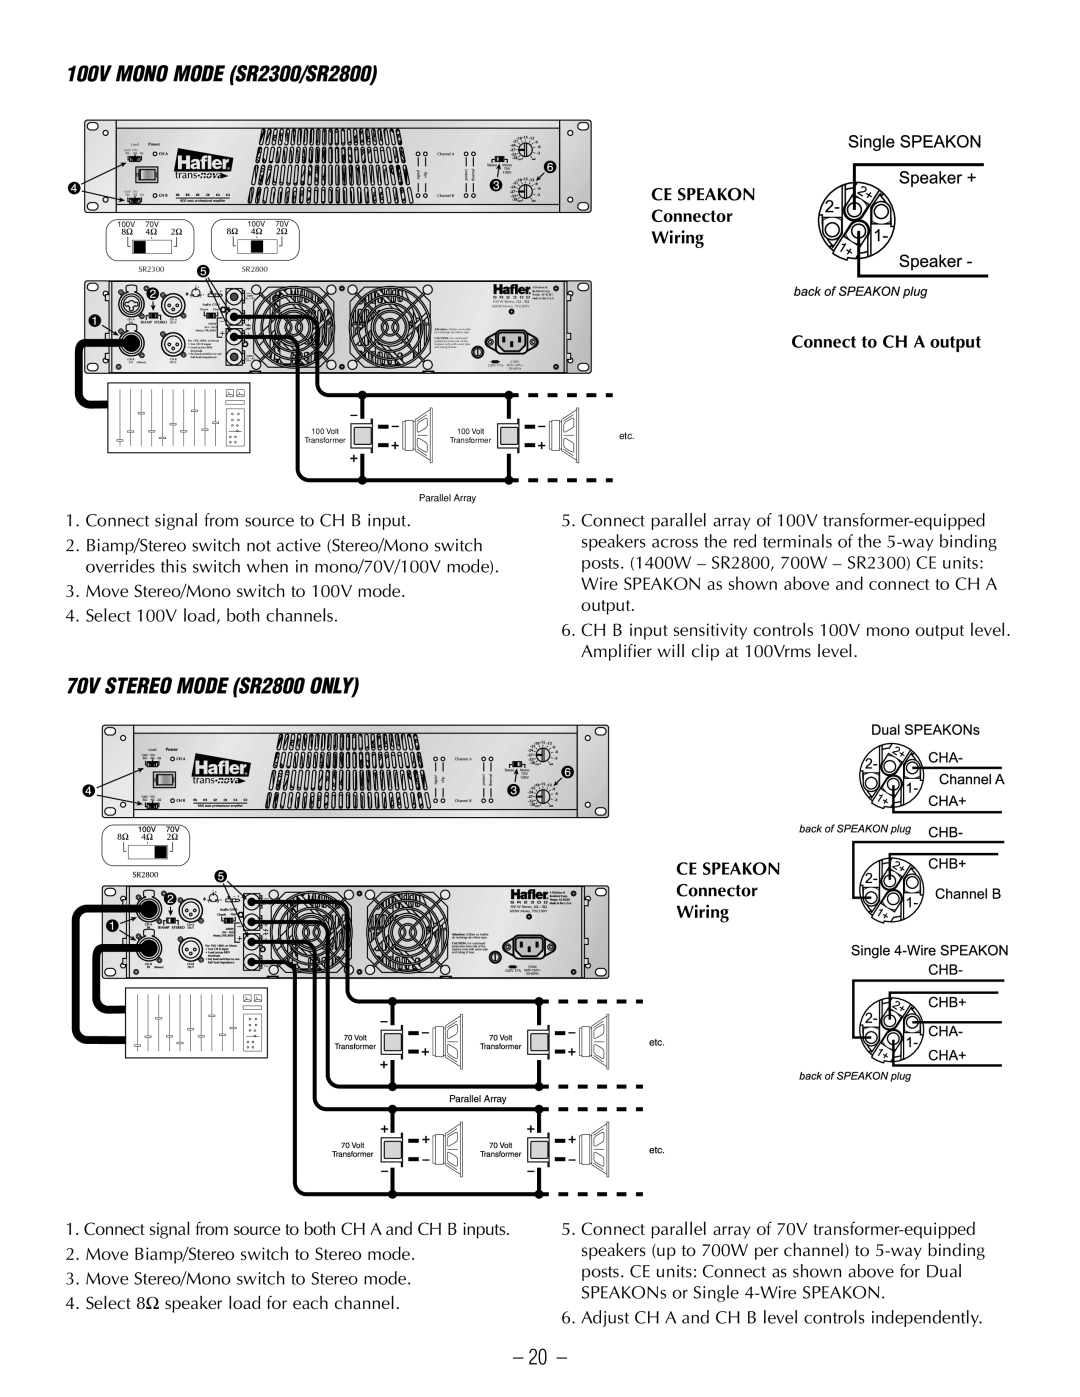 Hafler 100V MONO MODE SR2300/SR2800, 70V STEREO MODE SR2800 ONLY, CE SPEAKON Connector, Wiring Connect to CH A output 